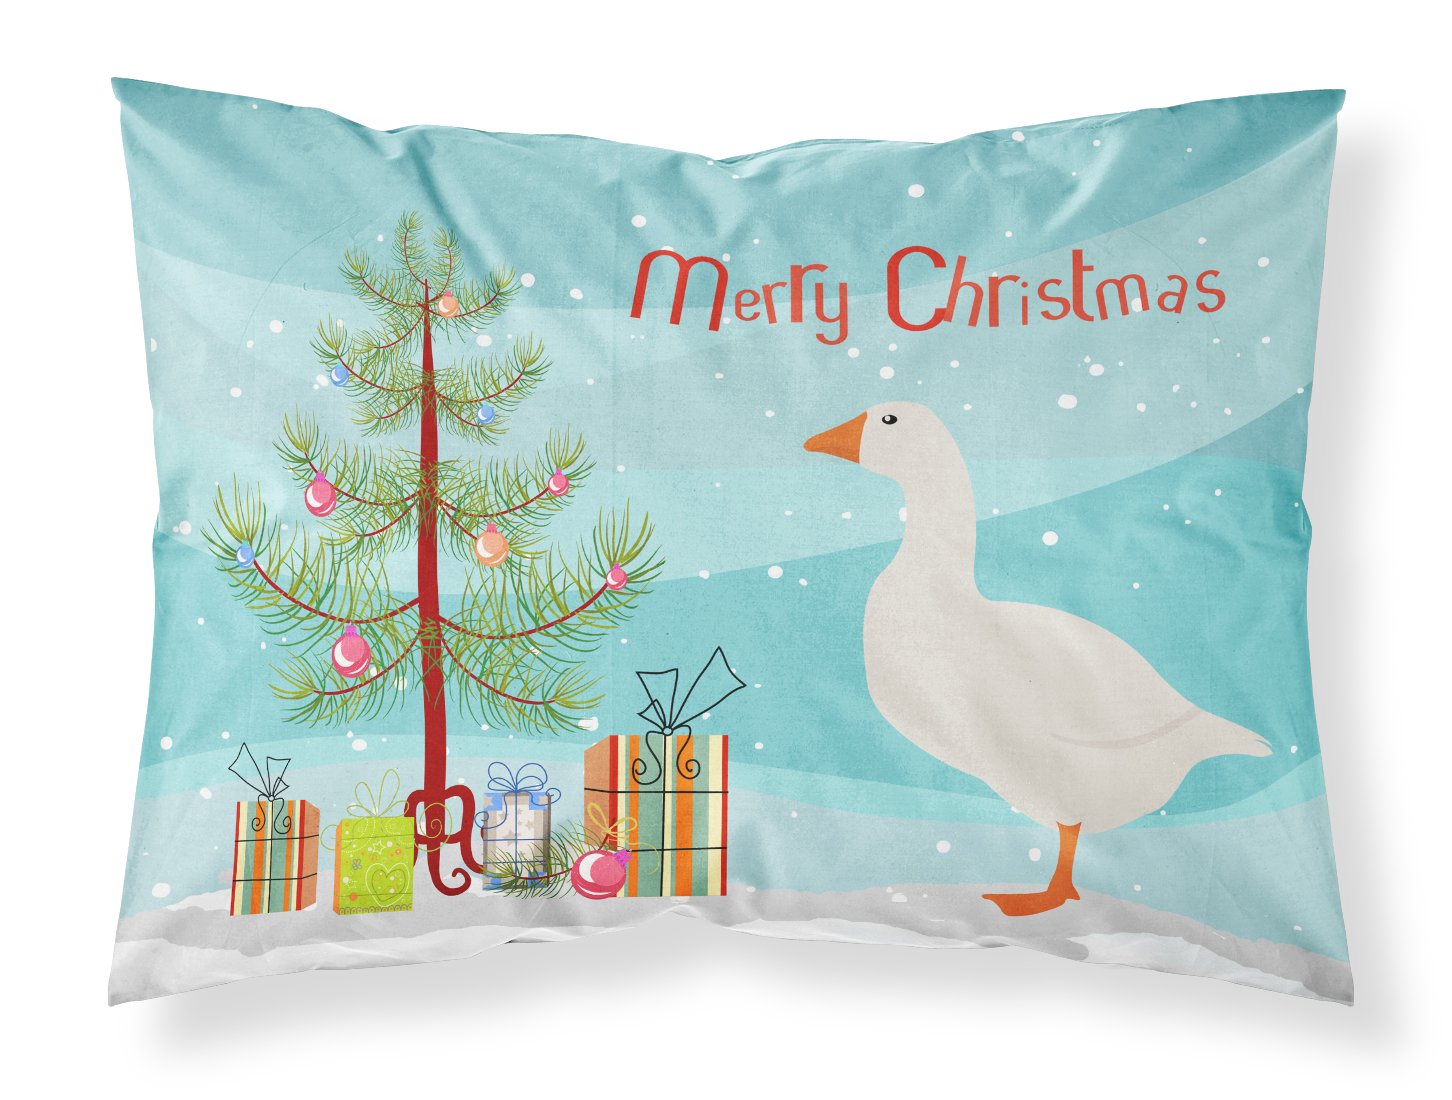 Shire Horse Christmas Fabric Standard Pillowcase BB9267PILLOWCASE by Caroline's Treasures